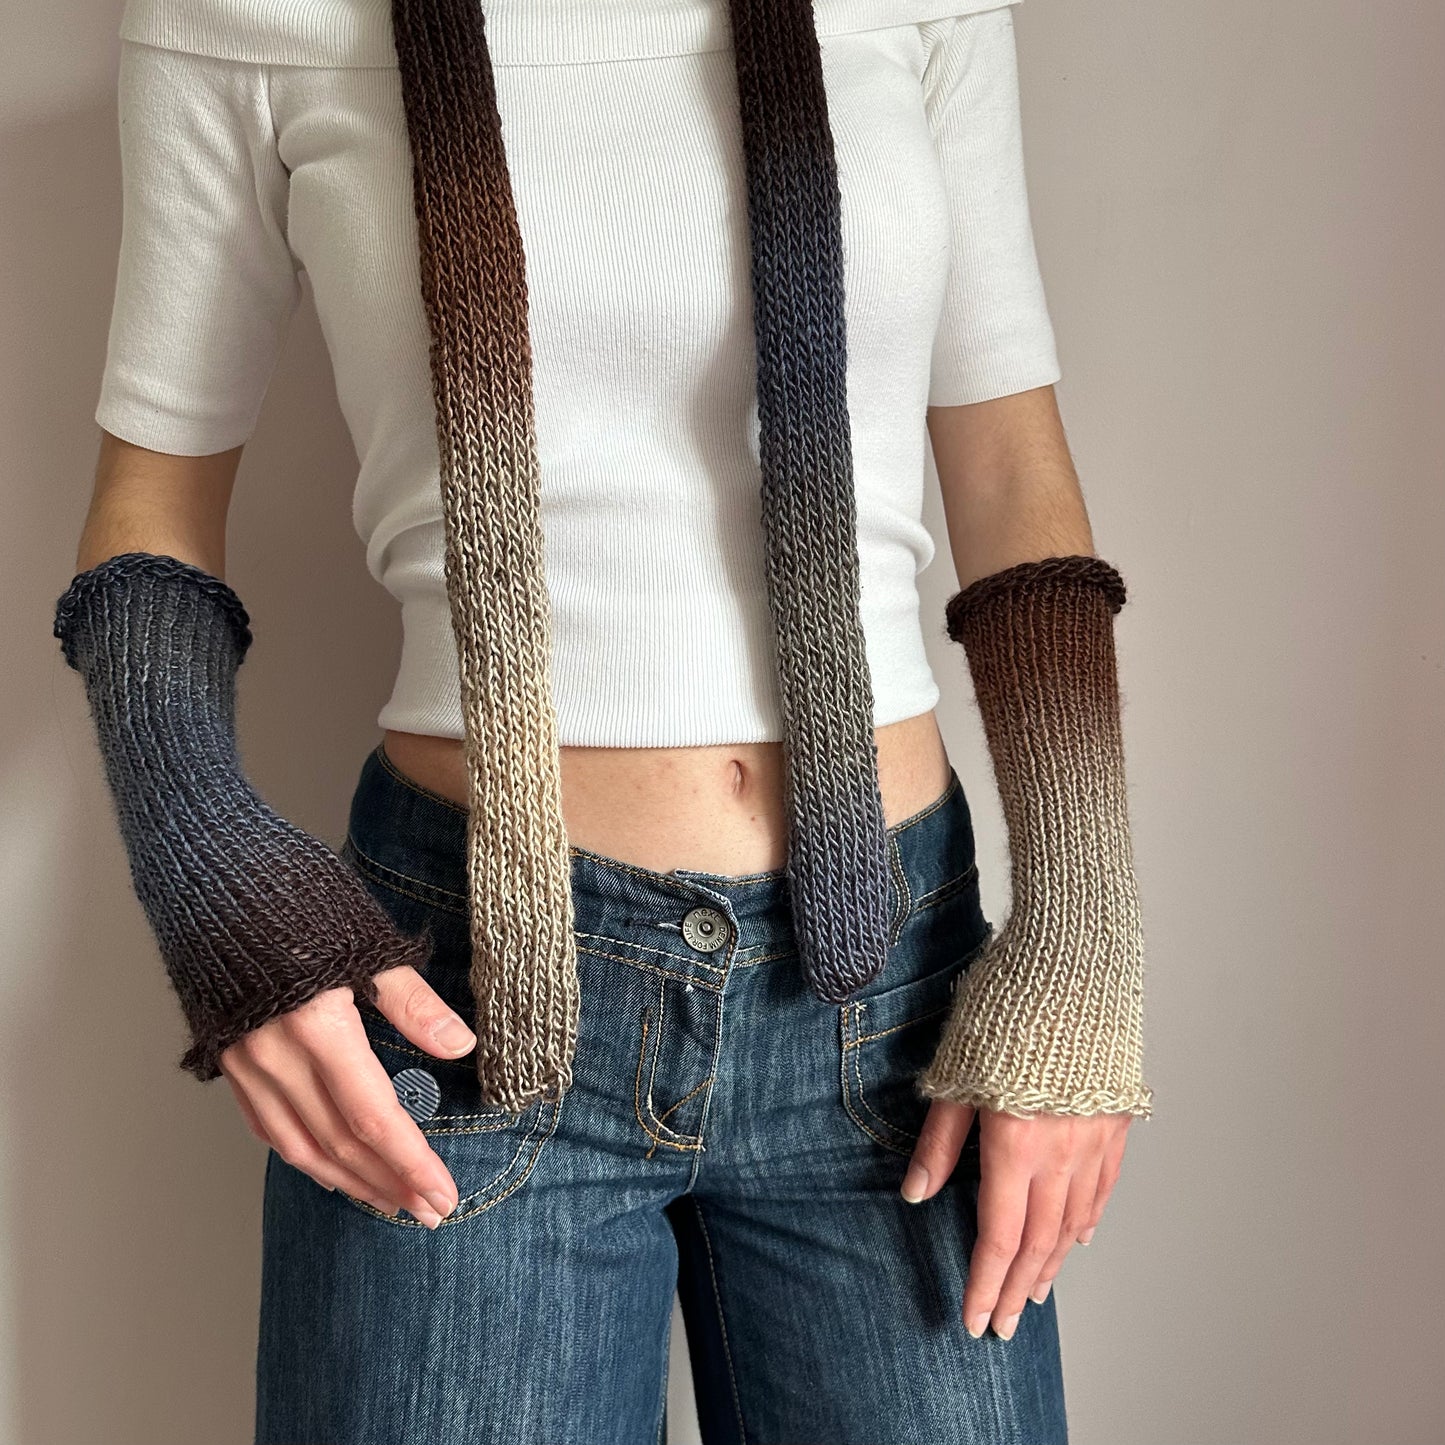 Handmade Seashell ombré knitted arm warmers